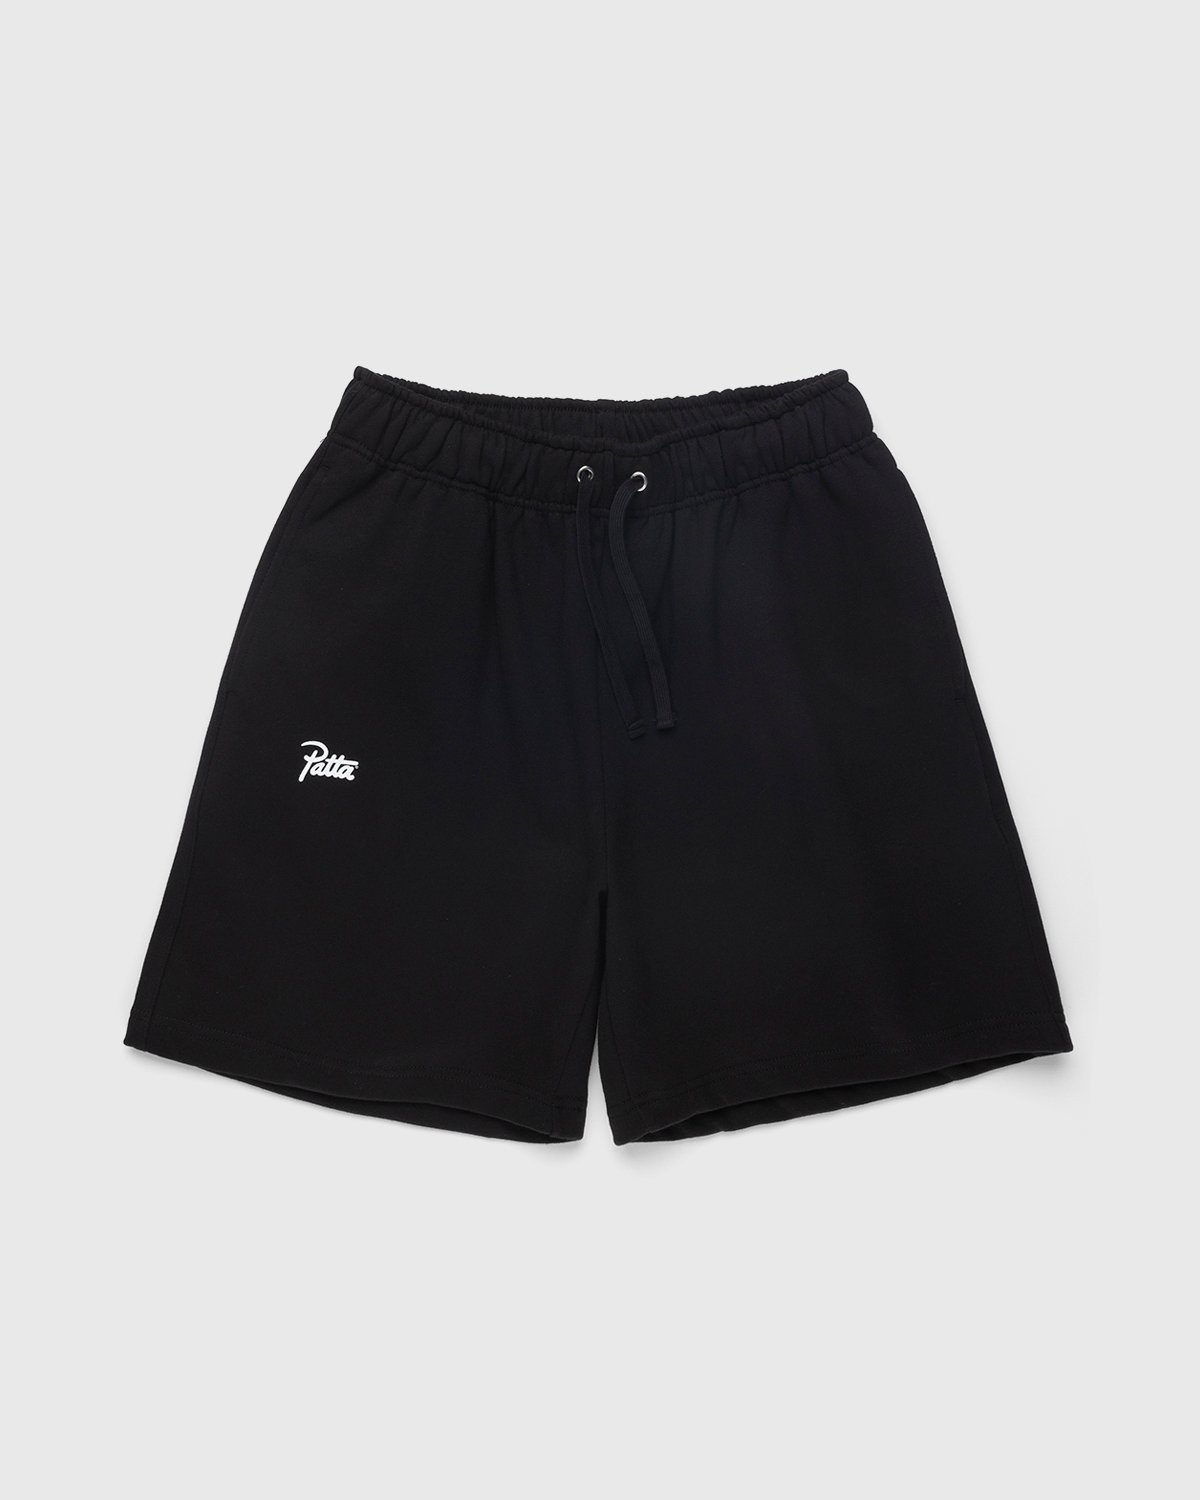 Patta - Basic Summer Jogging Shorts Black - Clothing - Black - Image 1